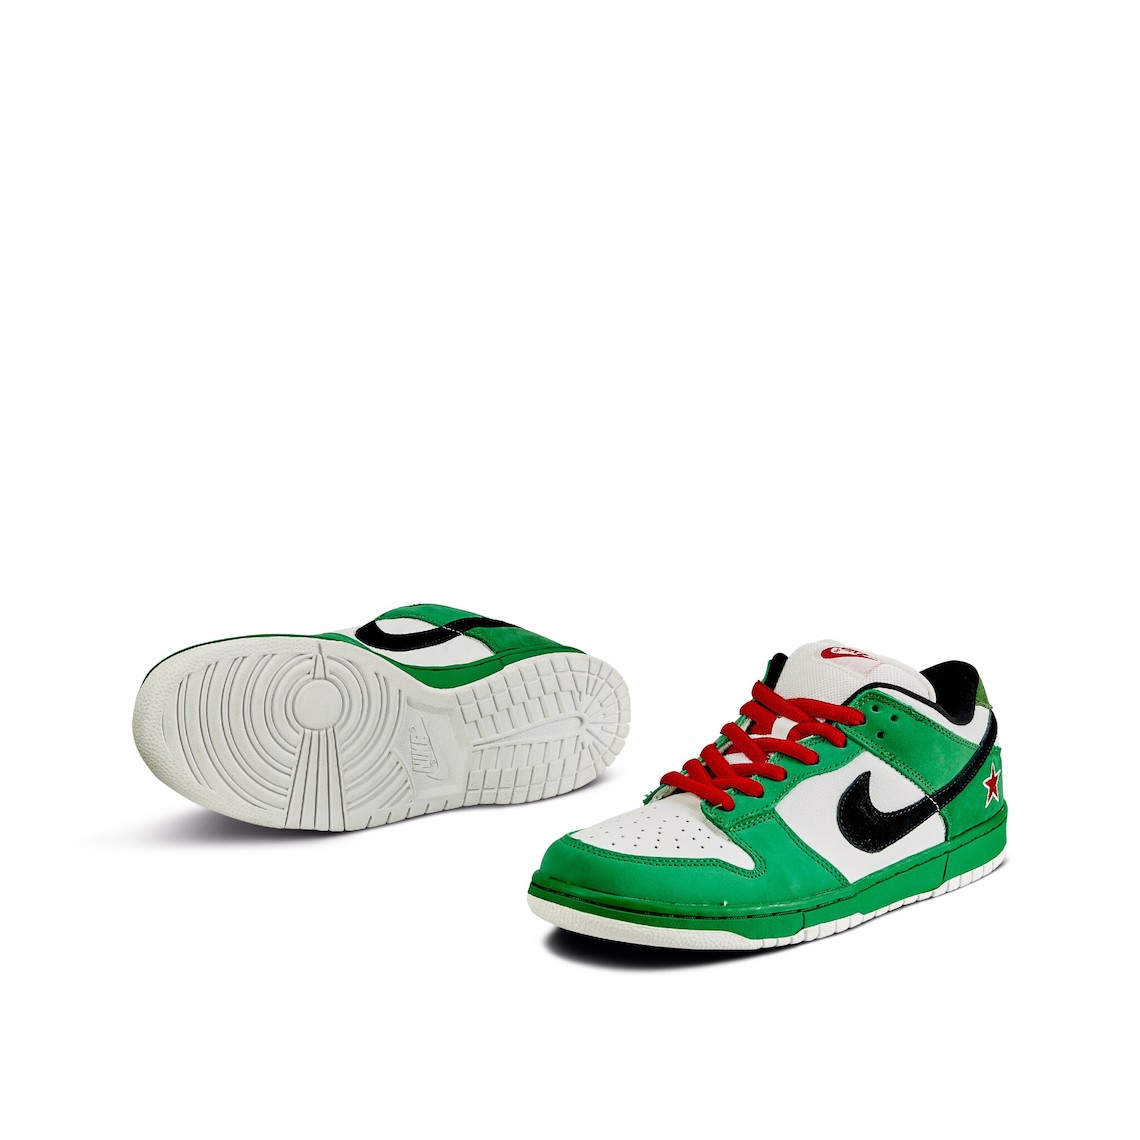 1672340436 108 Se rumorea que Nike SB Dunk Low Heineken 20 se